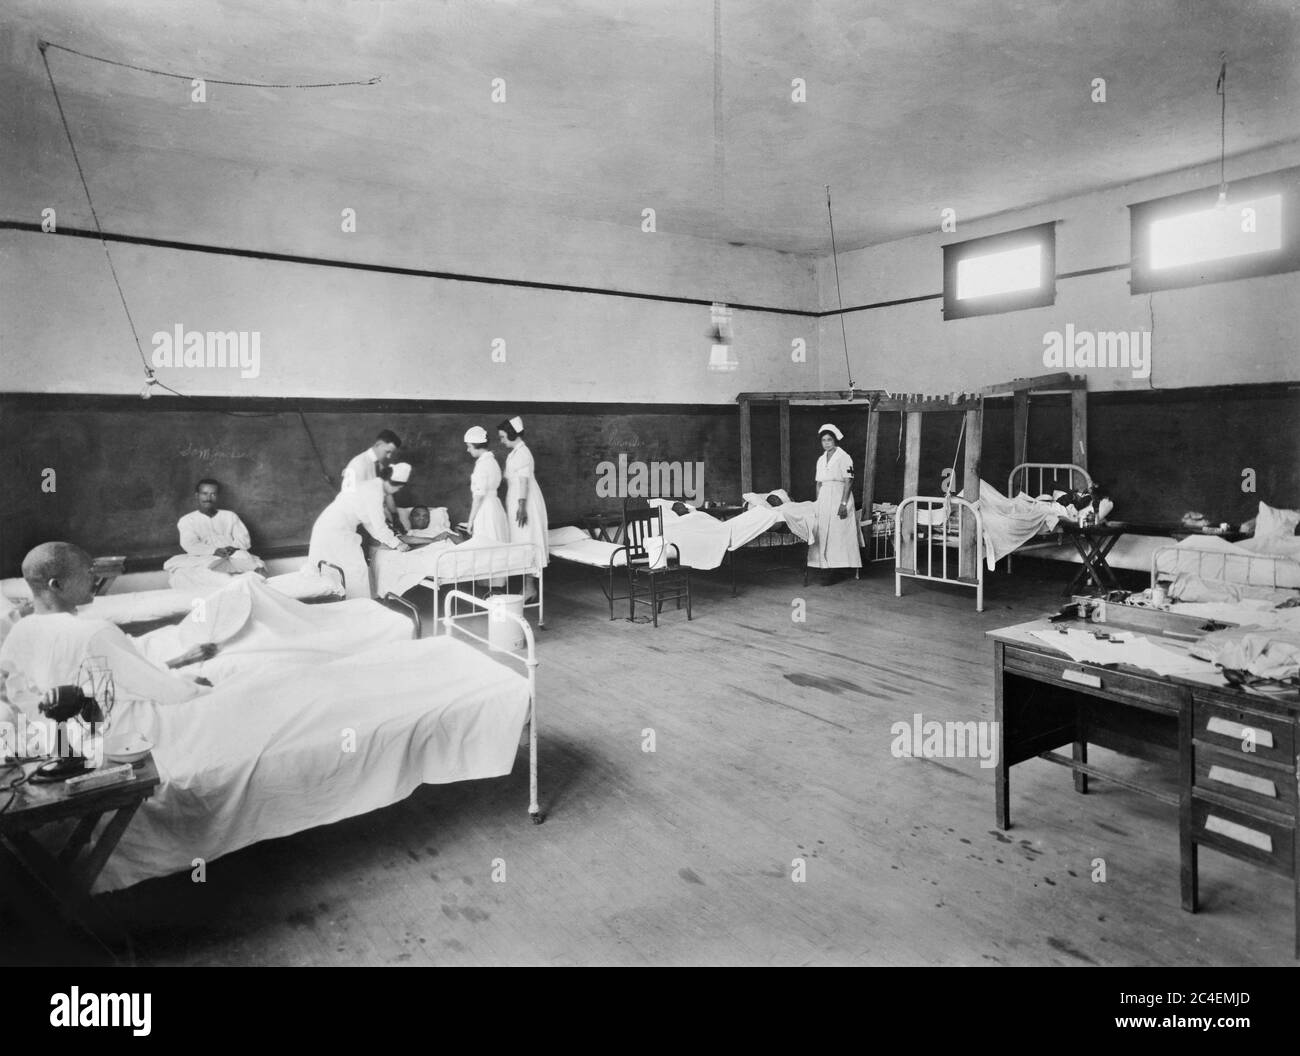 Chirurgische Station 1, Rotes Kreuz Krankenhaus nach Rennen Riot, Tulsa, Oklahoma, USA, American National Red Cross Photograph Collection, Juni 1921 Stockfoto